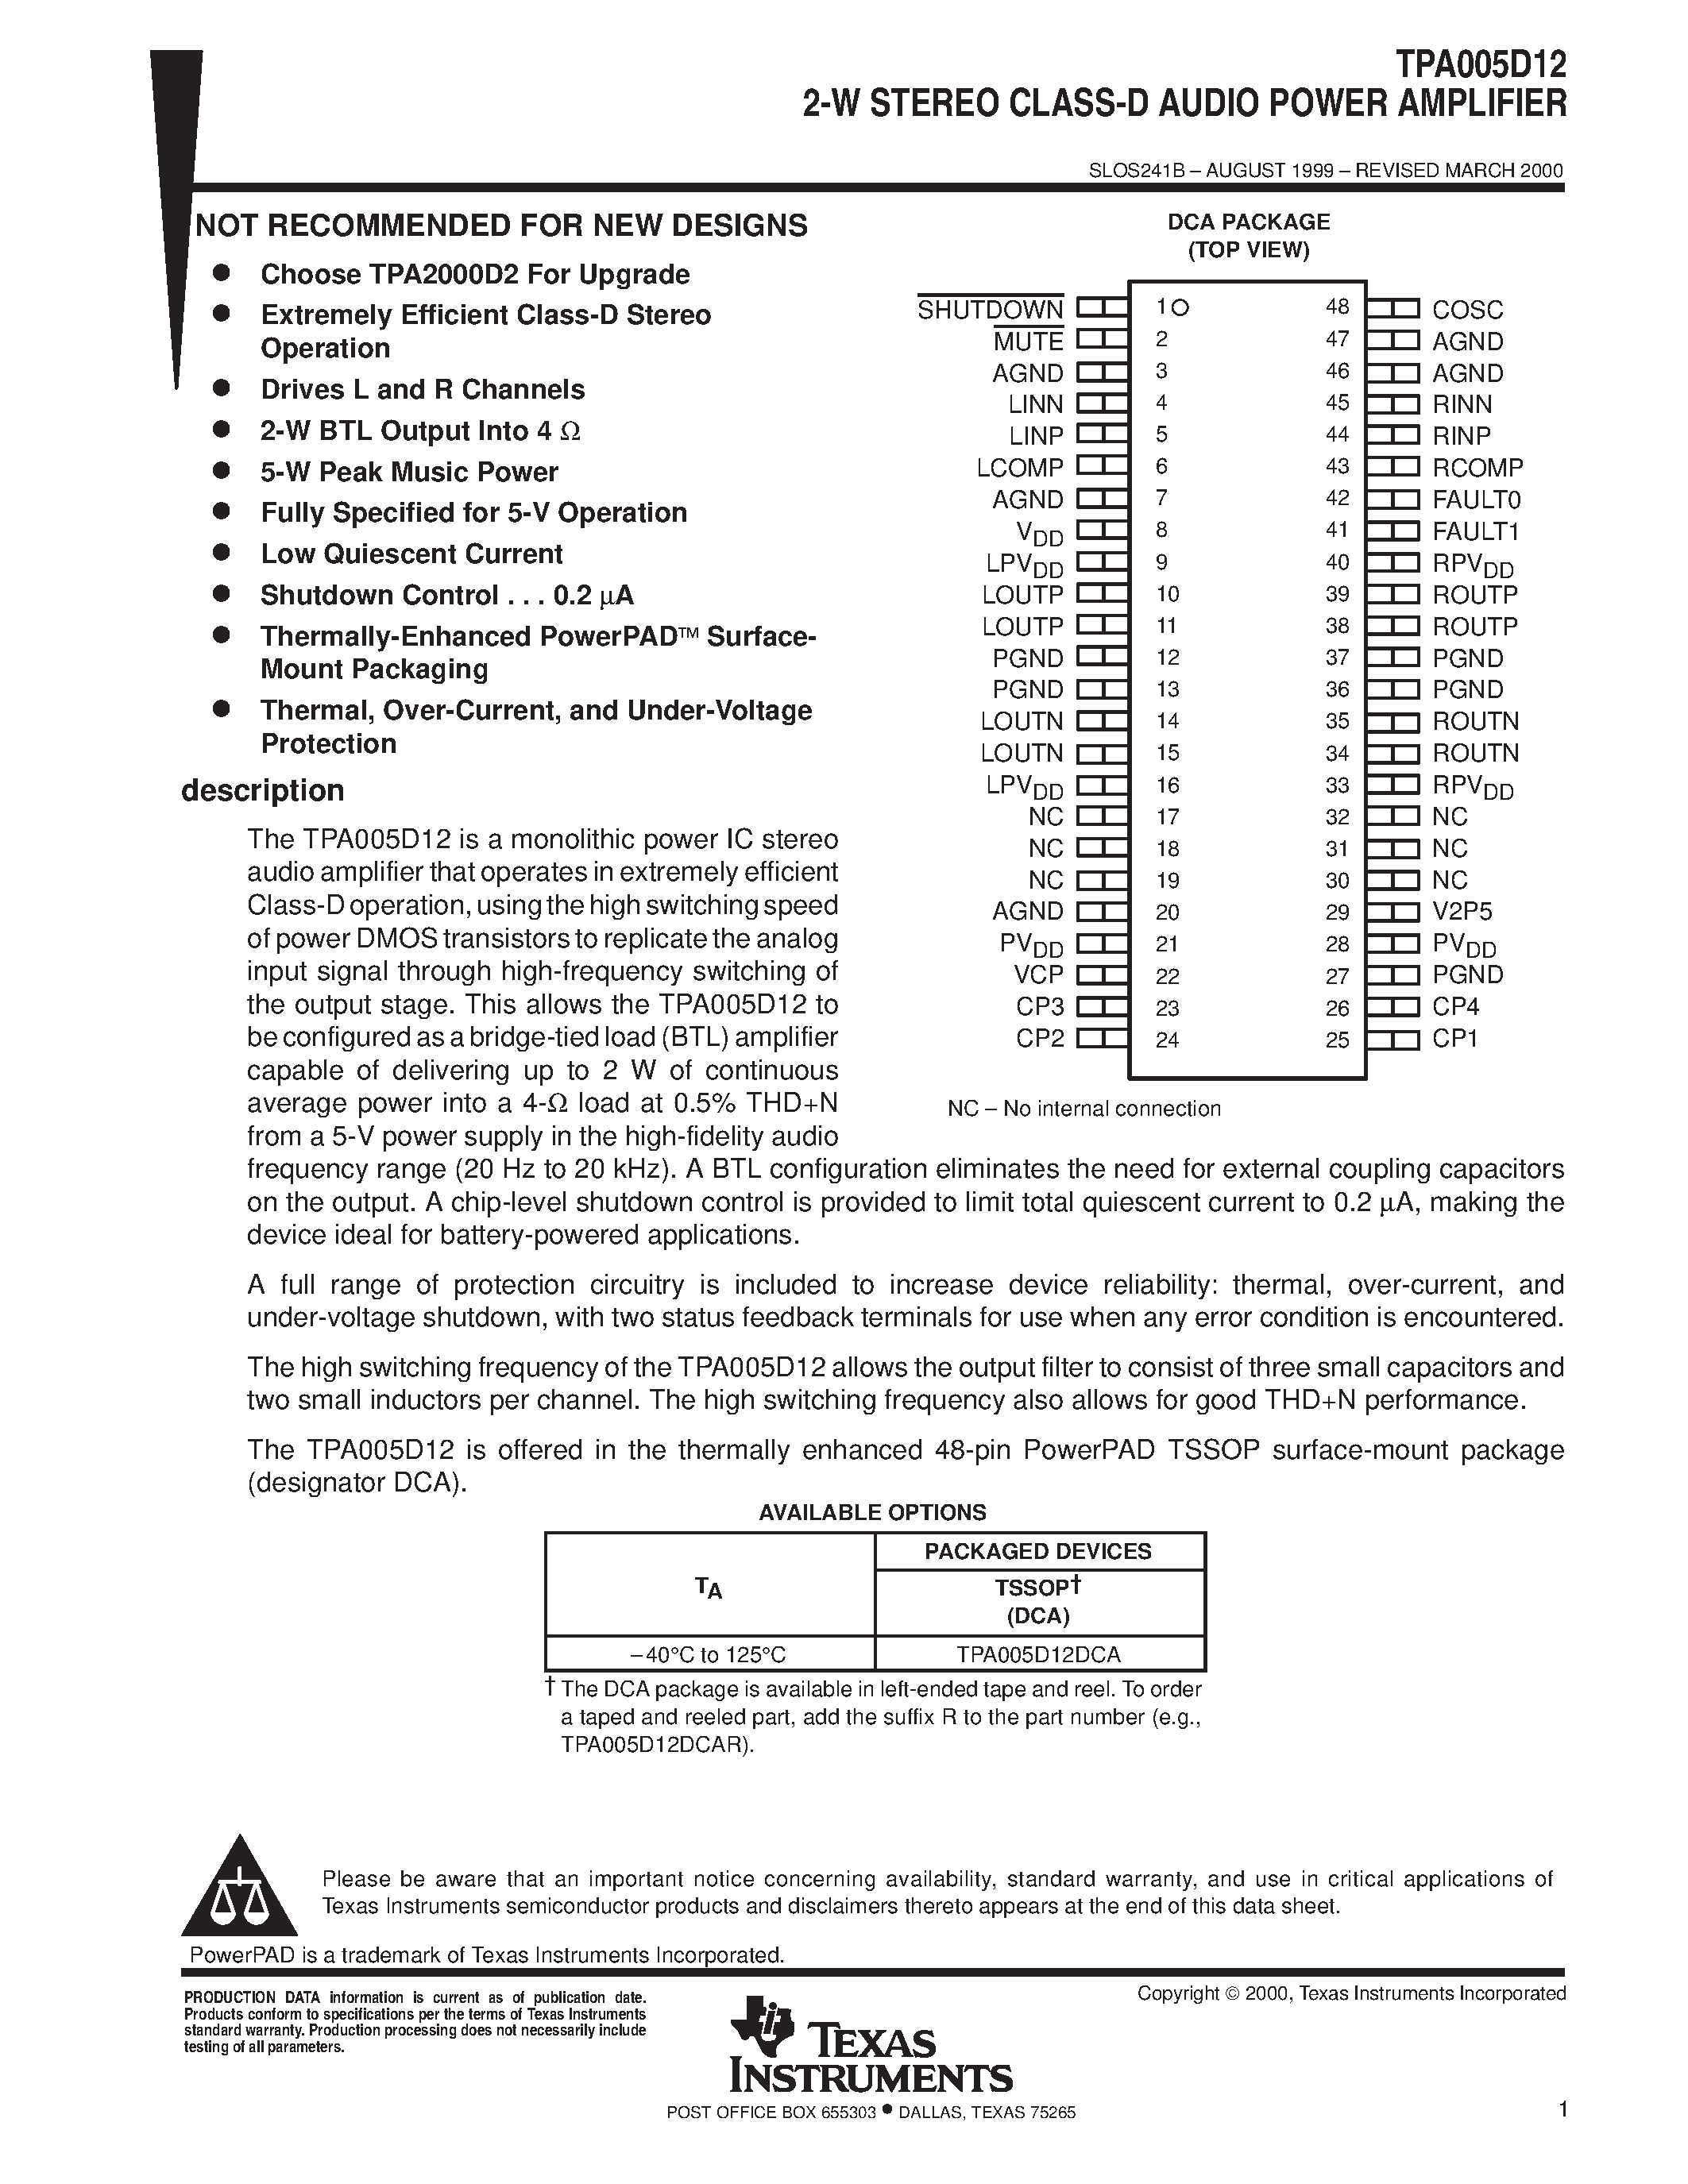 Datasheet TPA005D12 - 2-W STEREO CLASS-D AUDIO POWER AMPLIFIER page 1